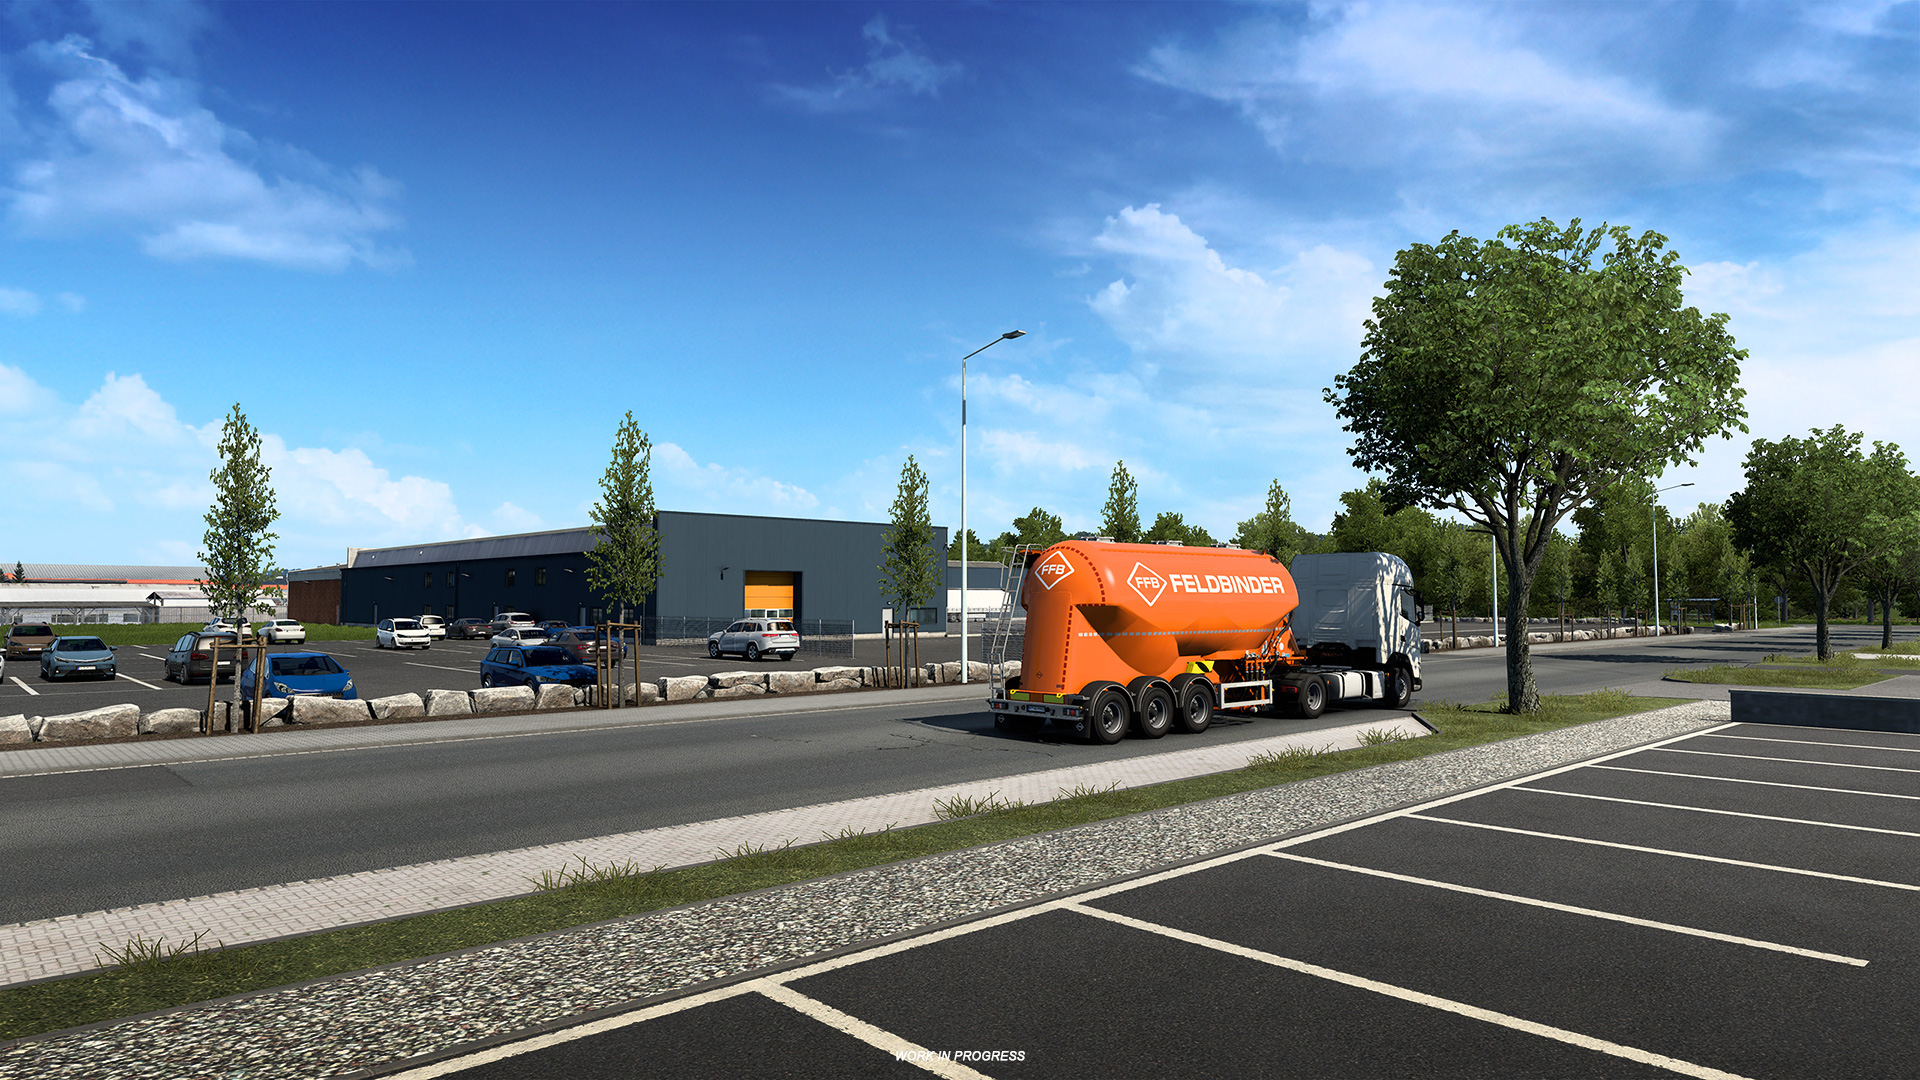 Euro Truck Simulator 2 partners with iconic Feldbinder brand in latest DLC